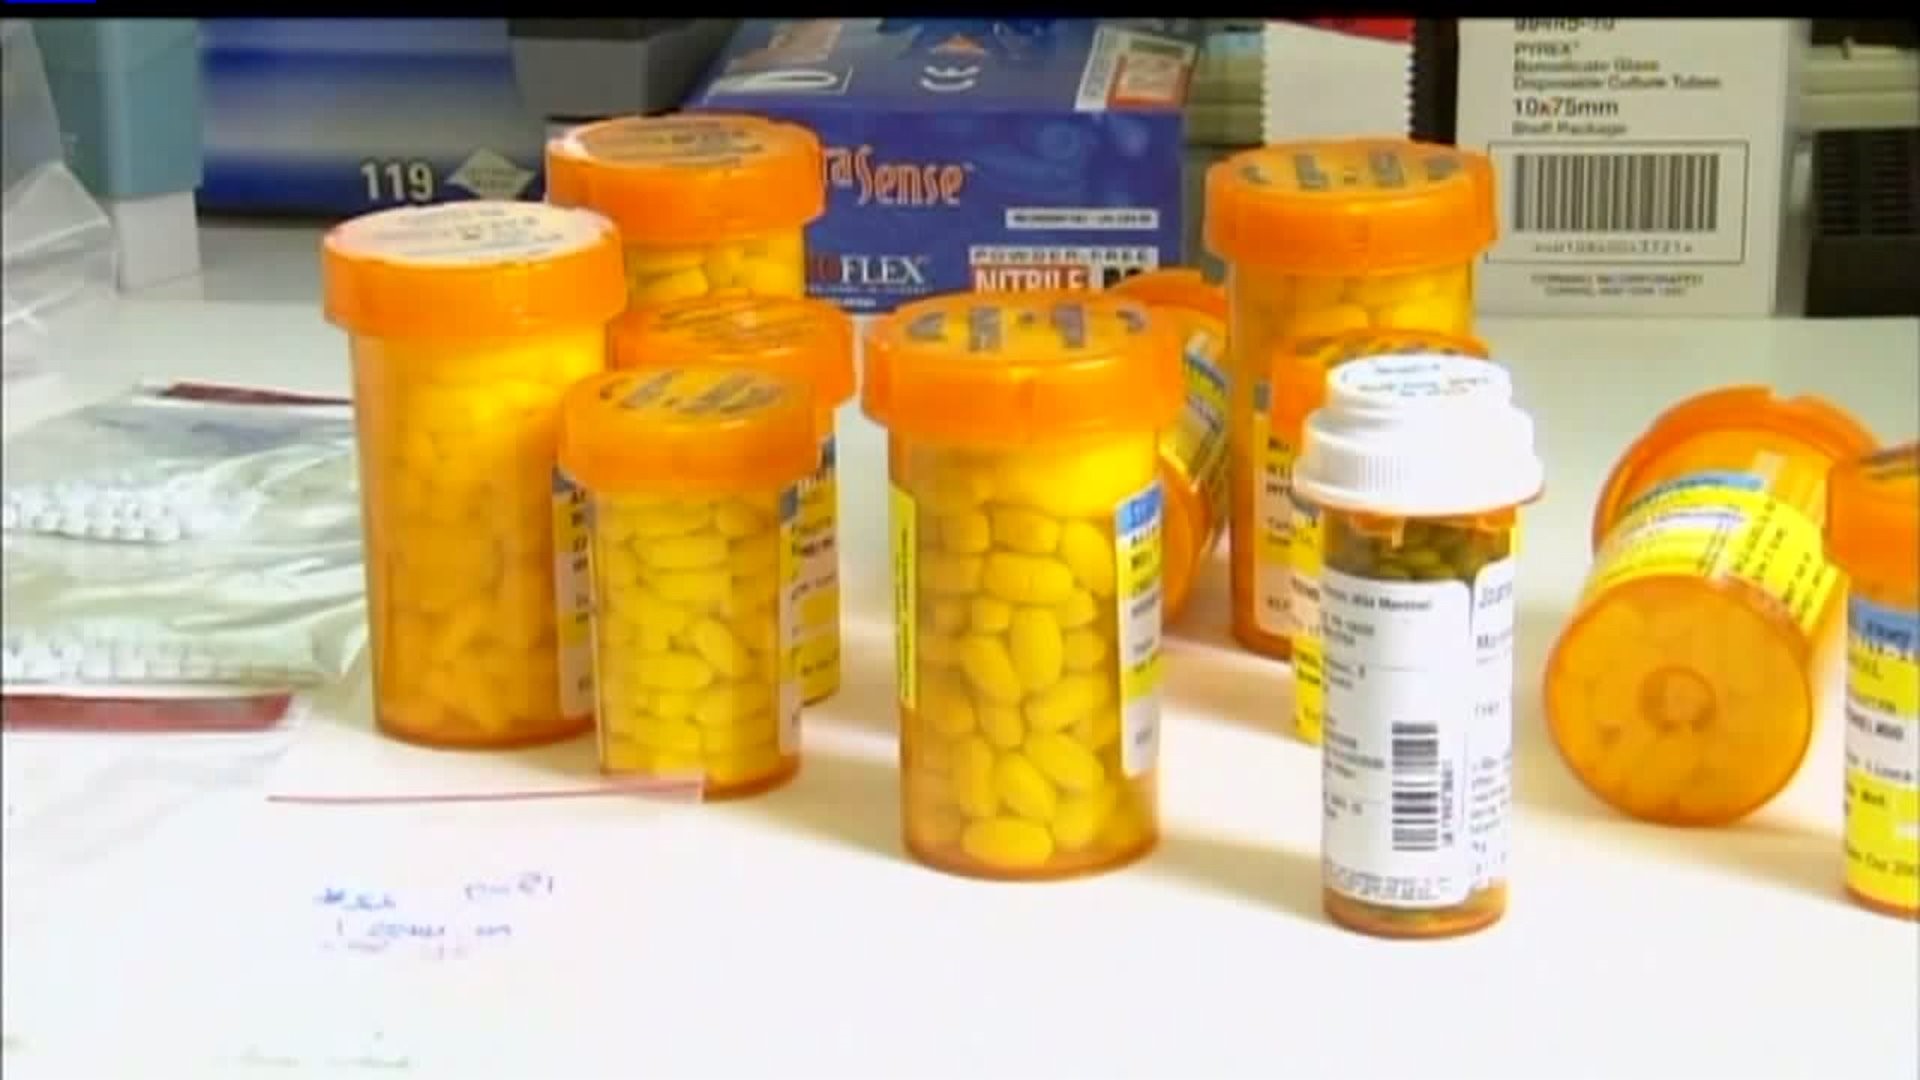 Review of prescription drug prices